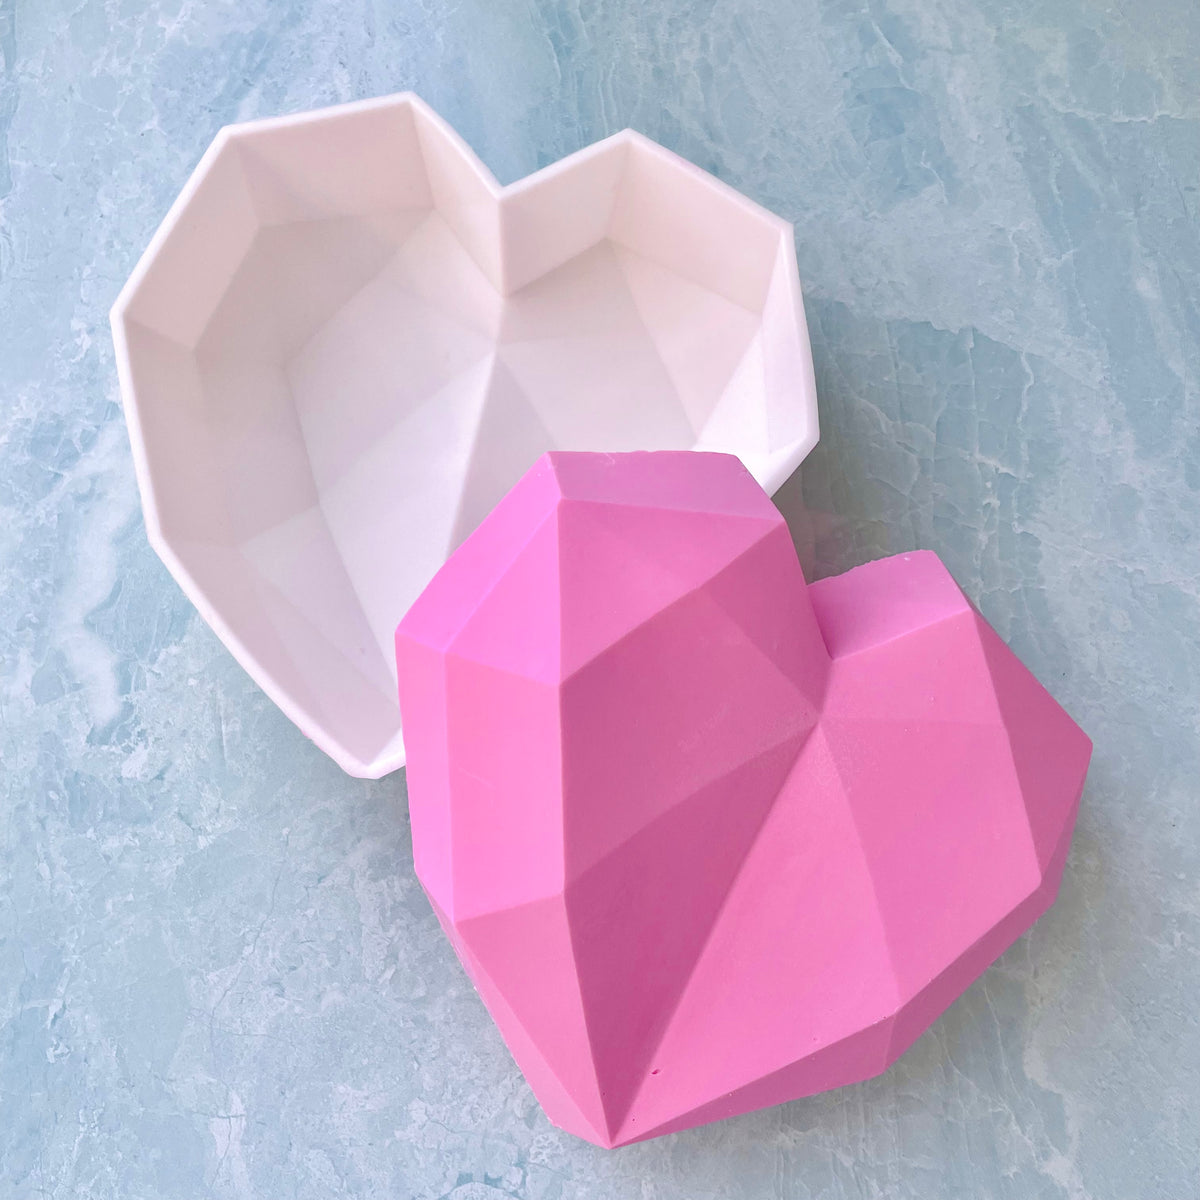 Mini Silicone Geometric Heart Mold – The Flour Girl